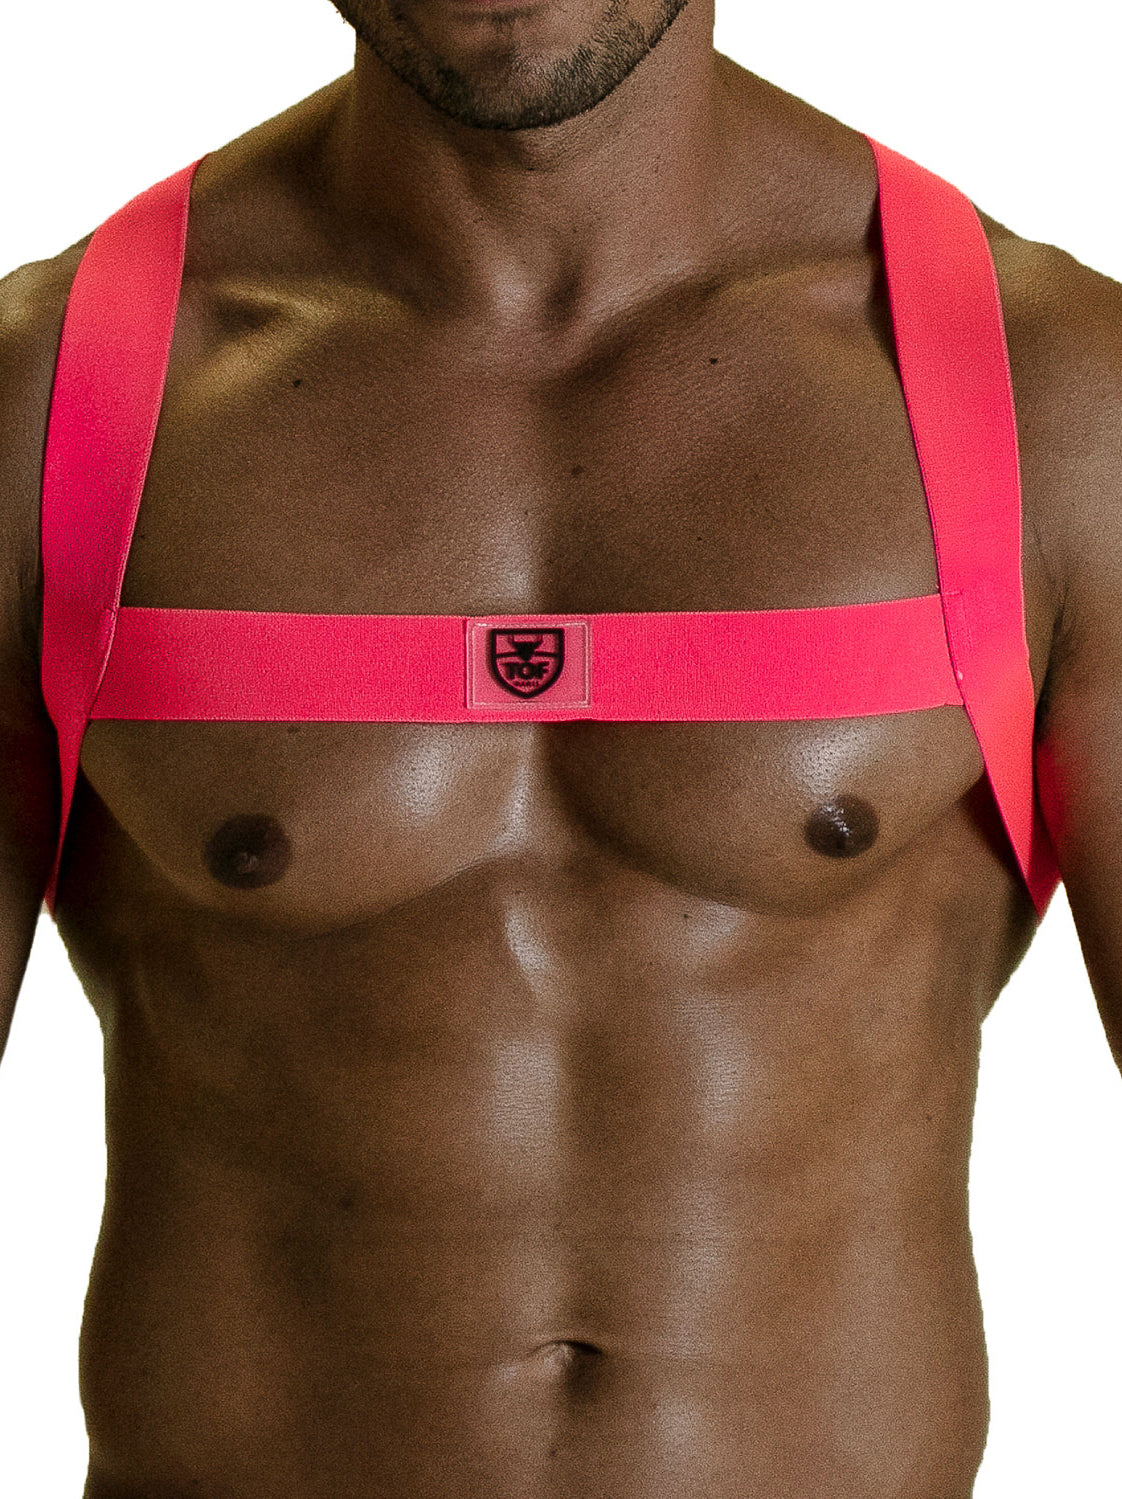 Tof Paris - Fetish Elastic Harness Neon Pink